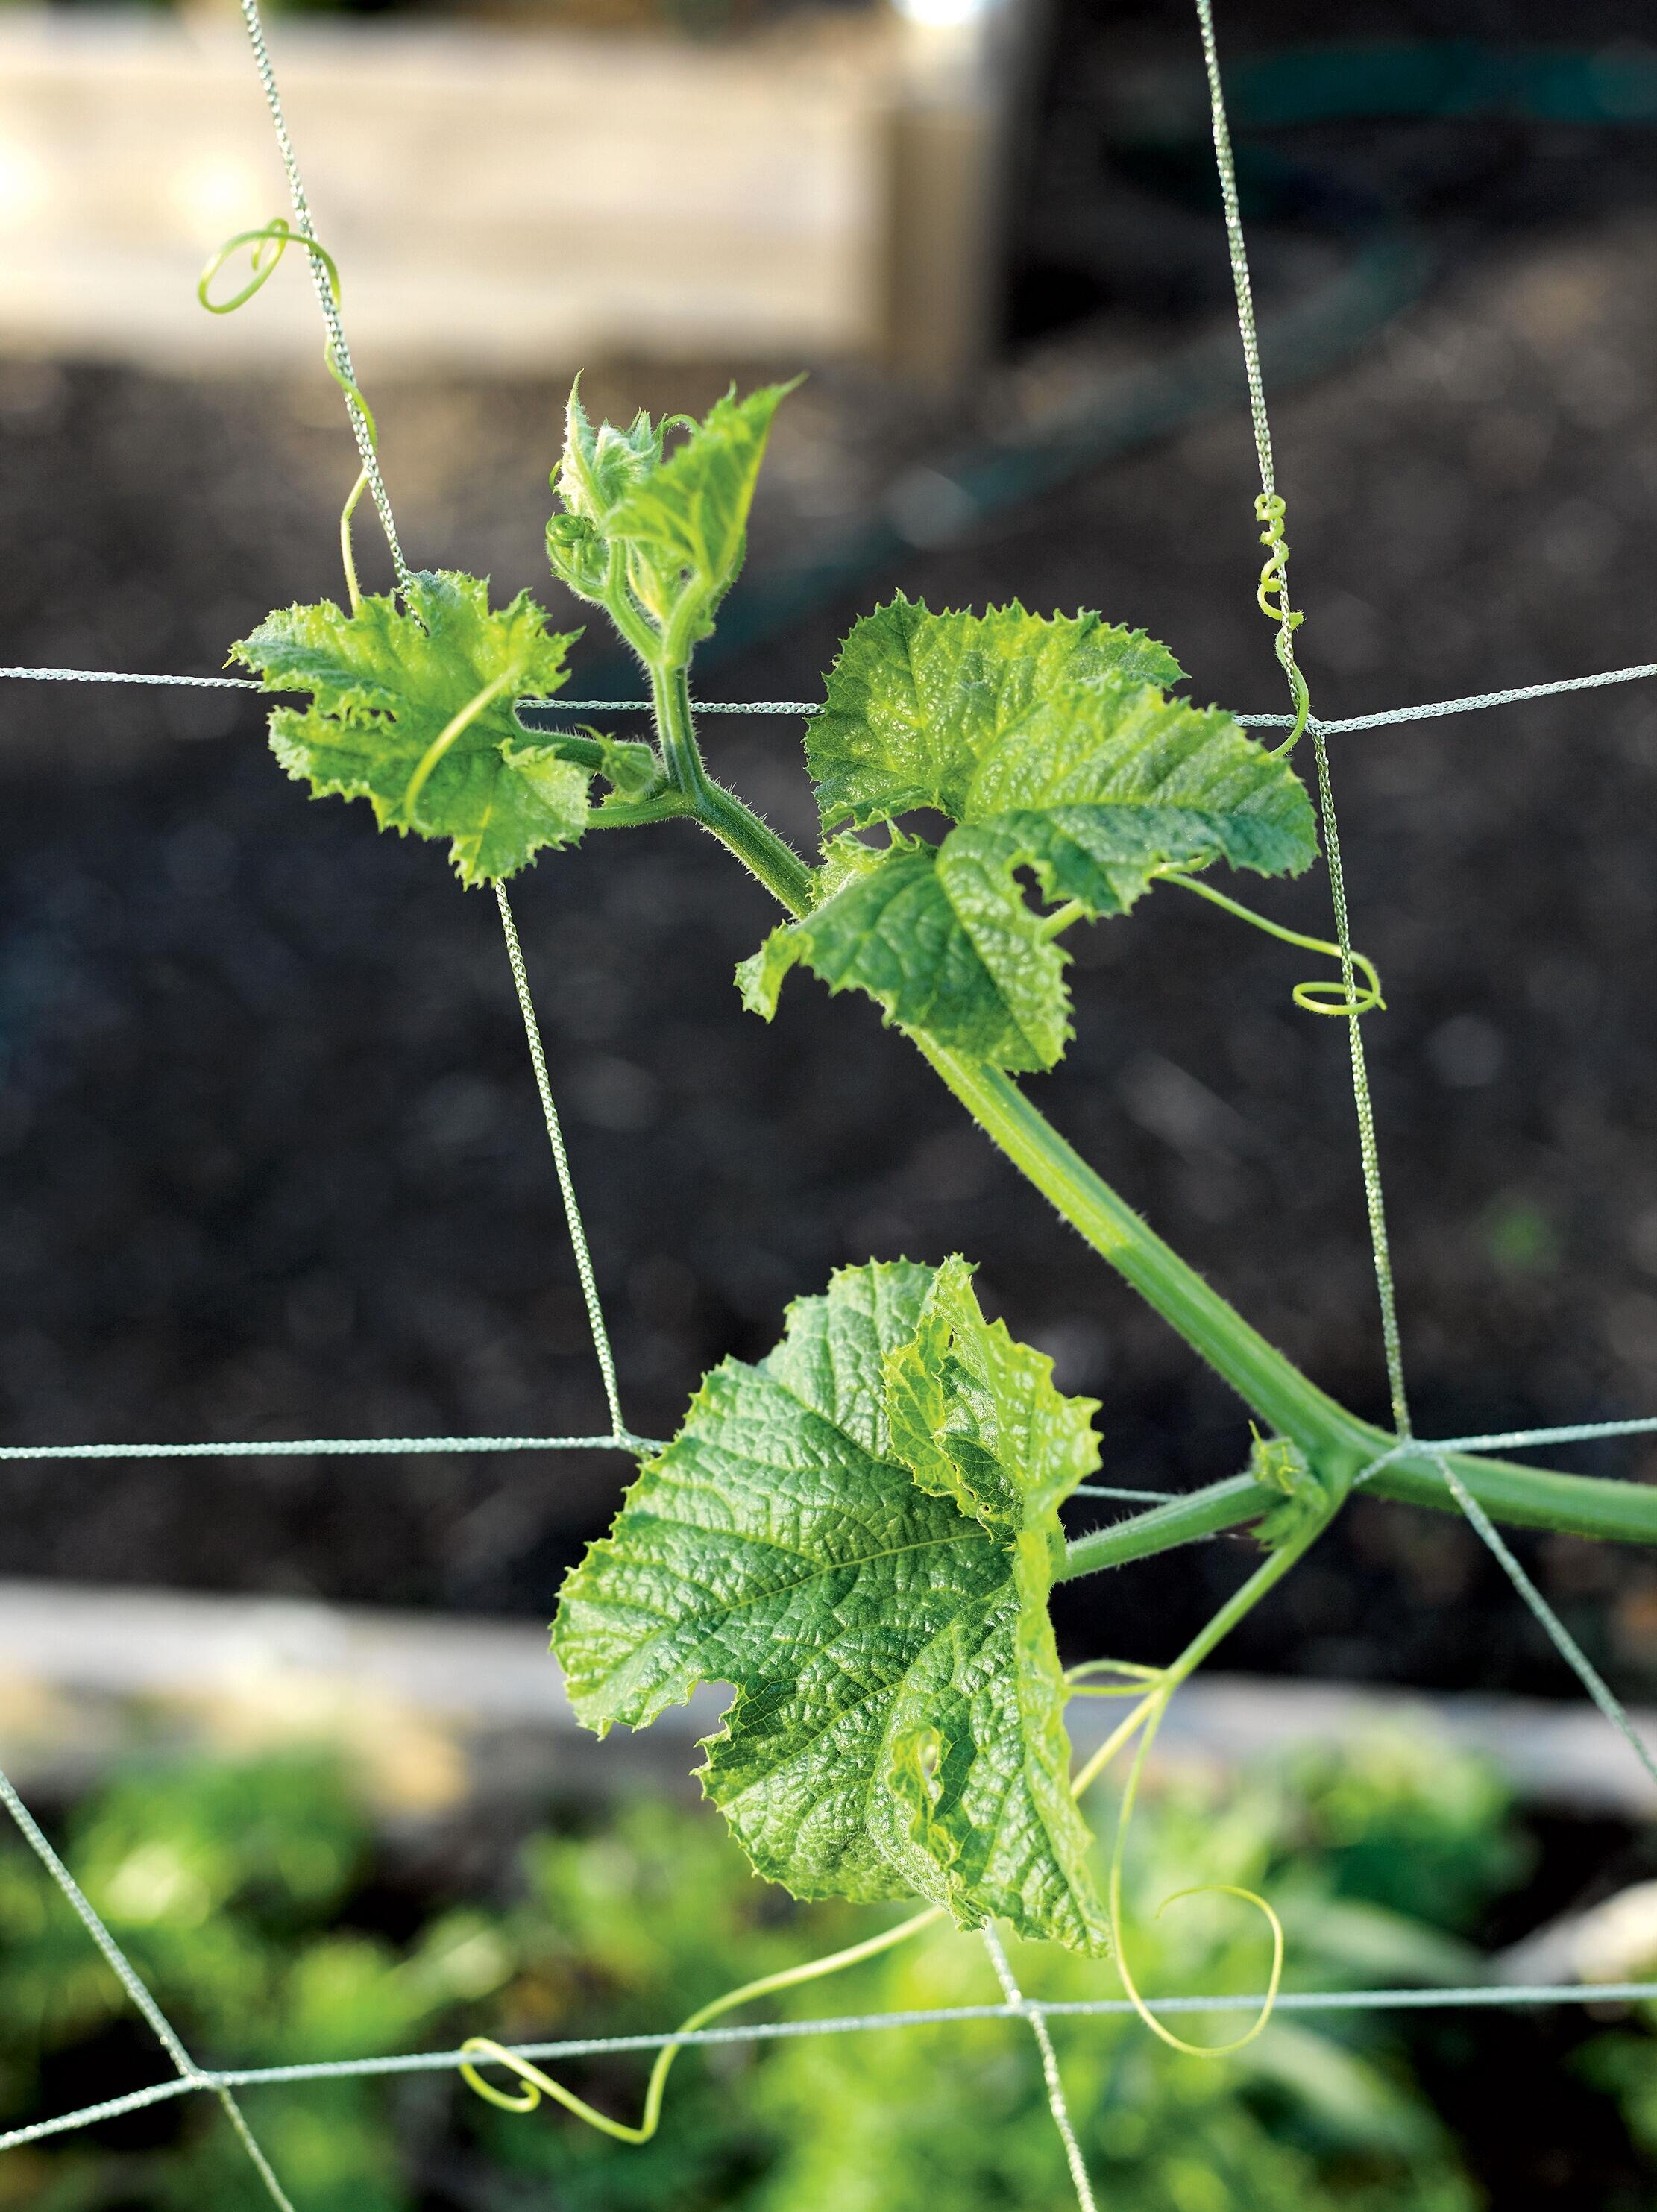 Plant Vine Tomato Mesh Trellis Netting Support Climbing Netting Strong Durable 